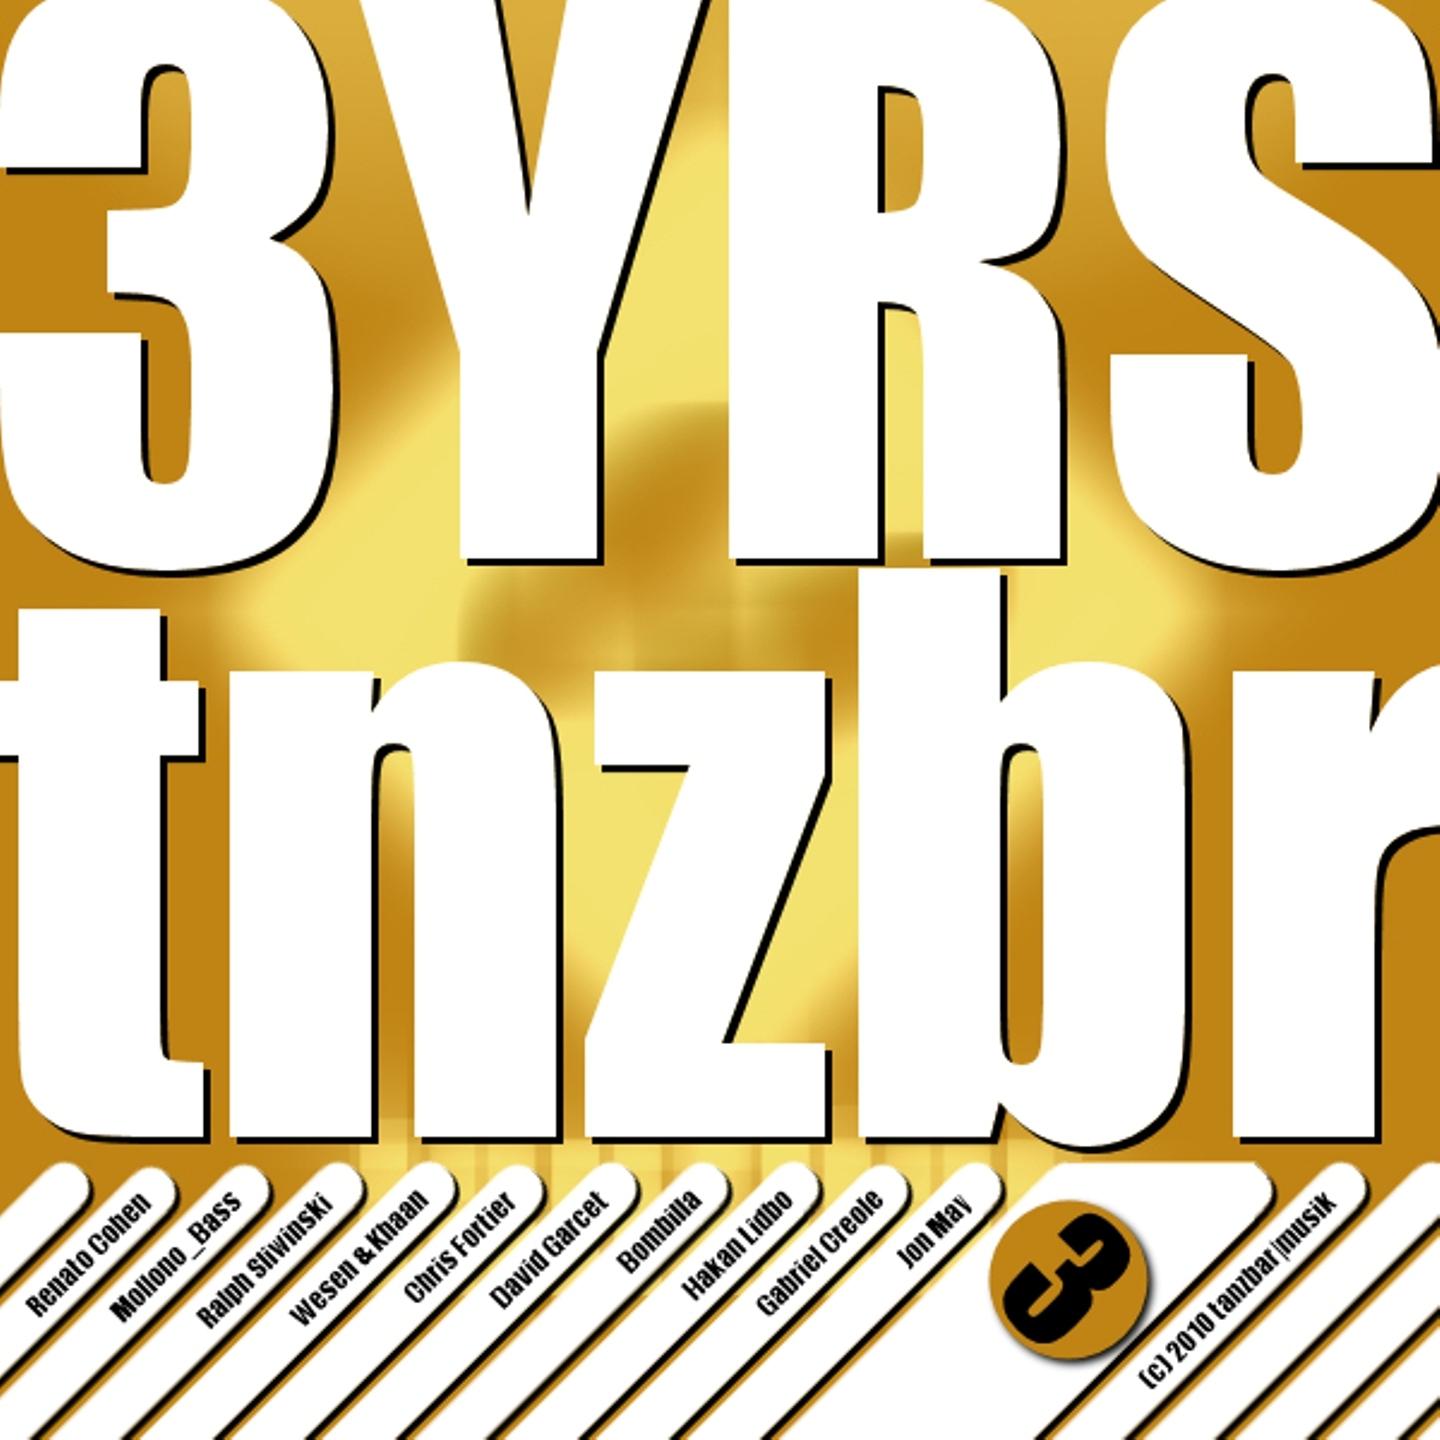 Постер альбома 3 Years Tanzbar Musik, Pt. 3